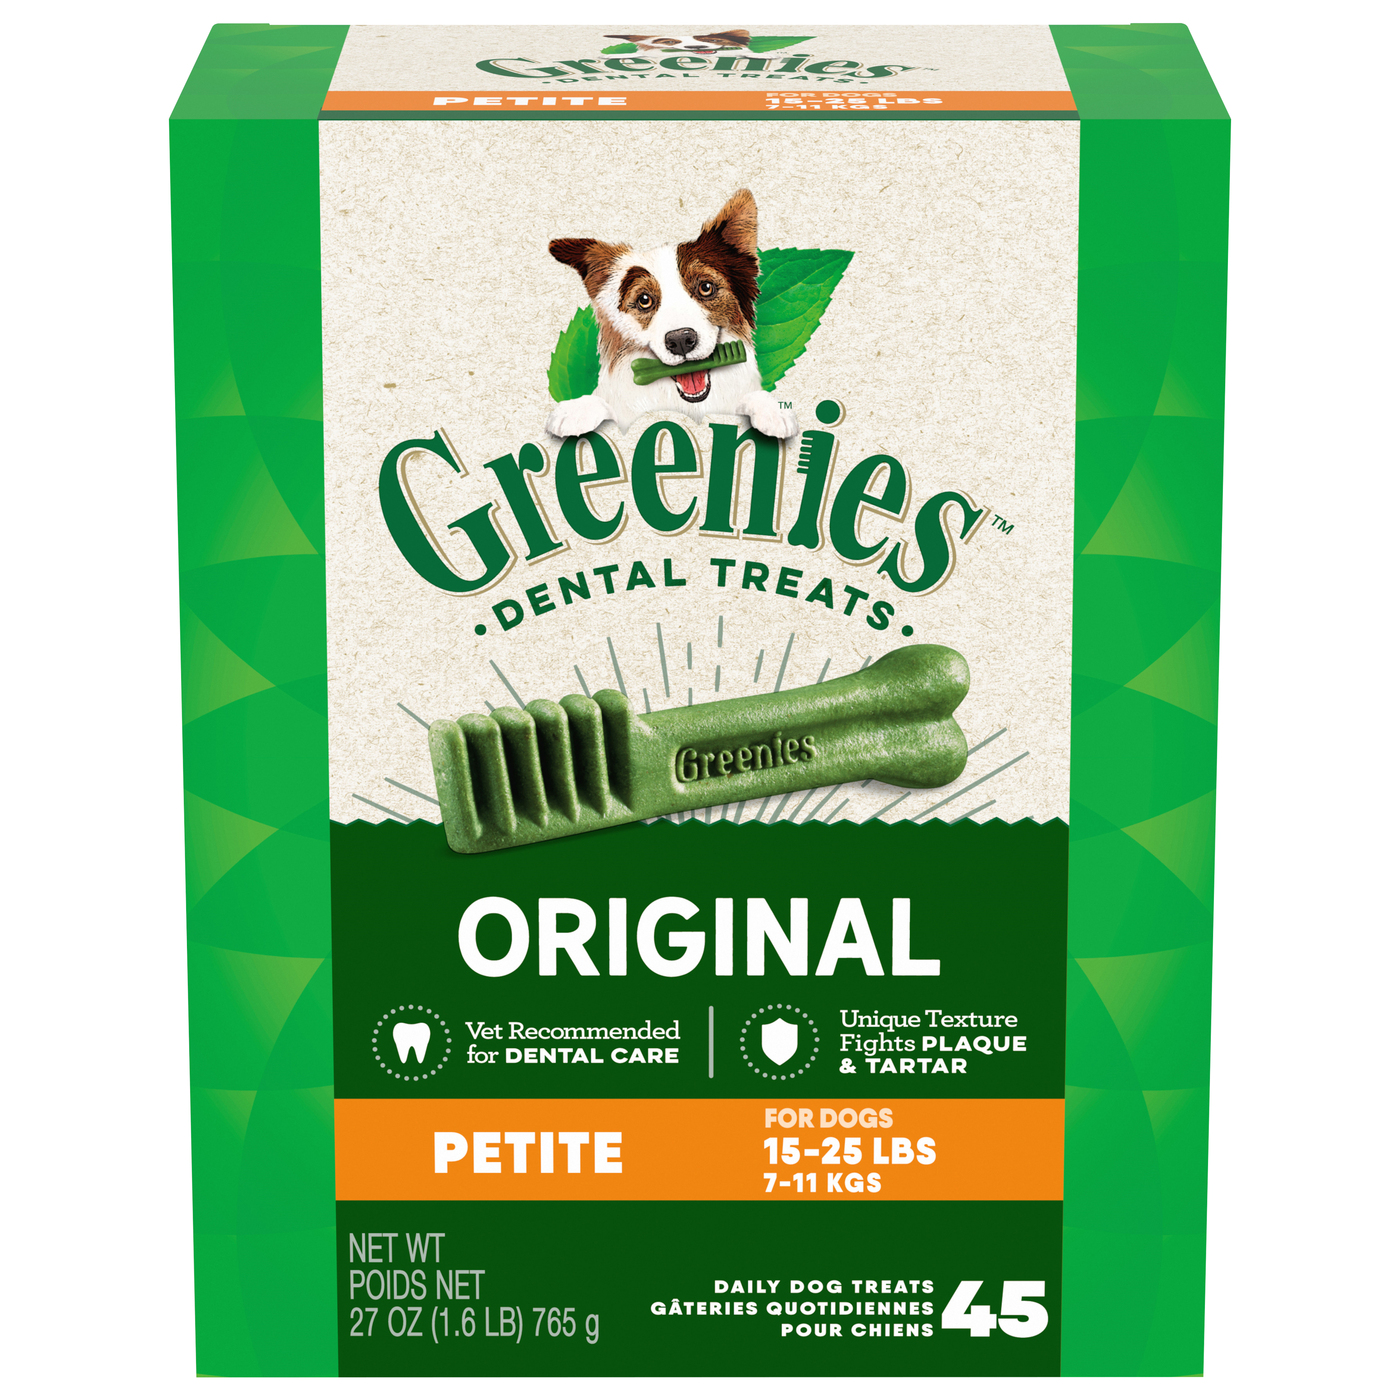 Greenies Original Petite Dental Treats 45 ct Box